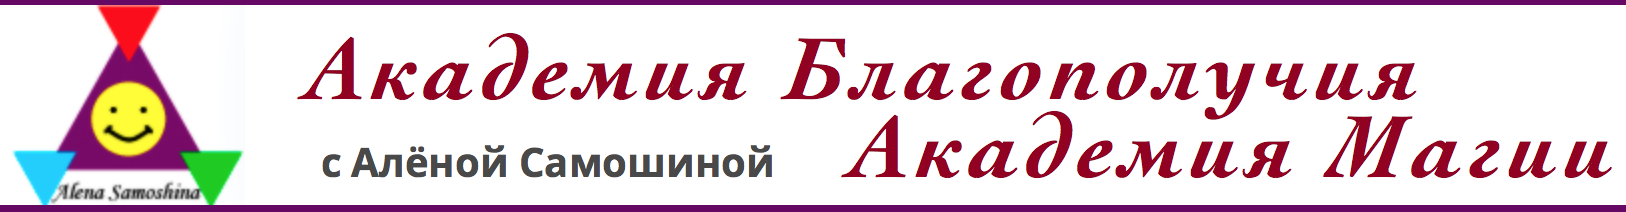 www.AlenaSamoshina.ru